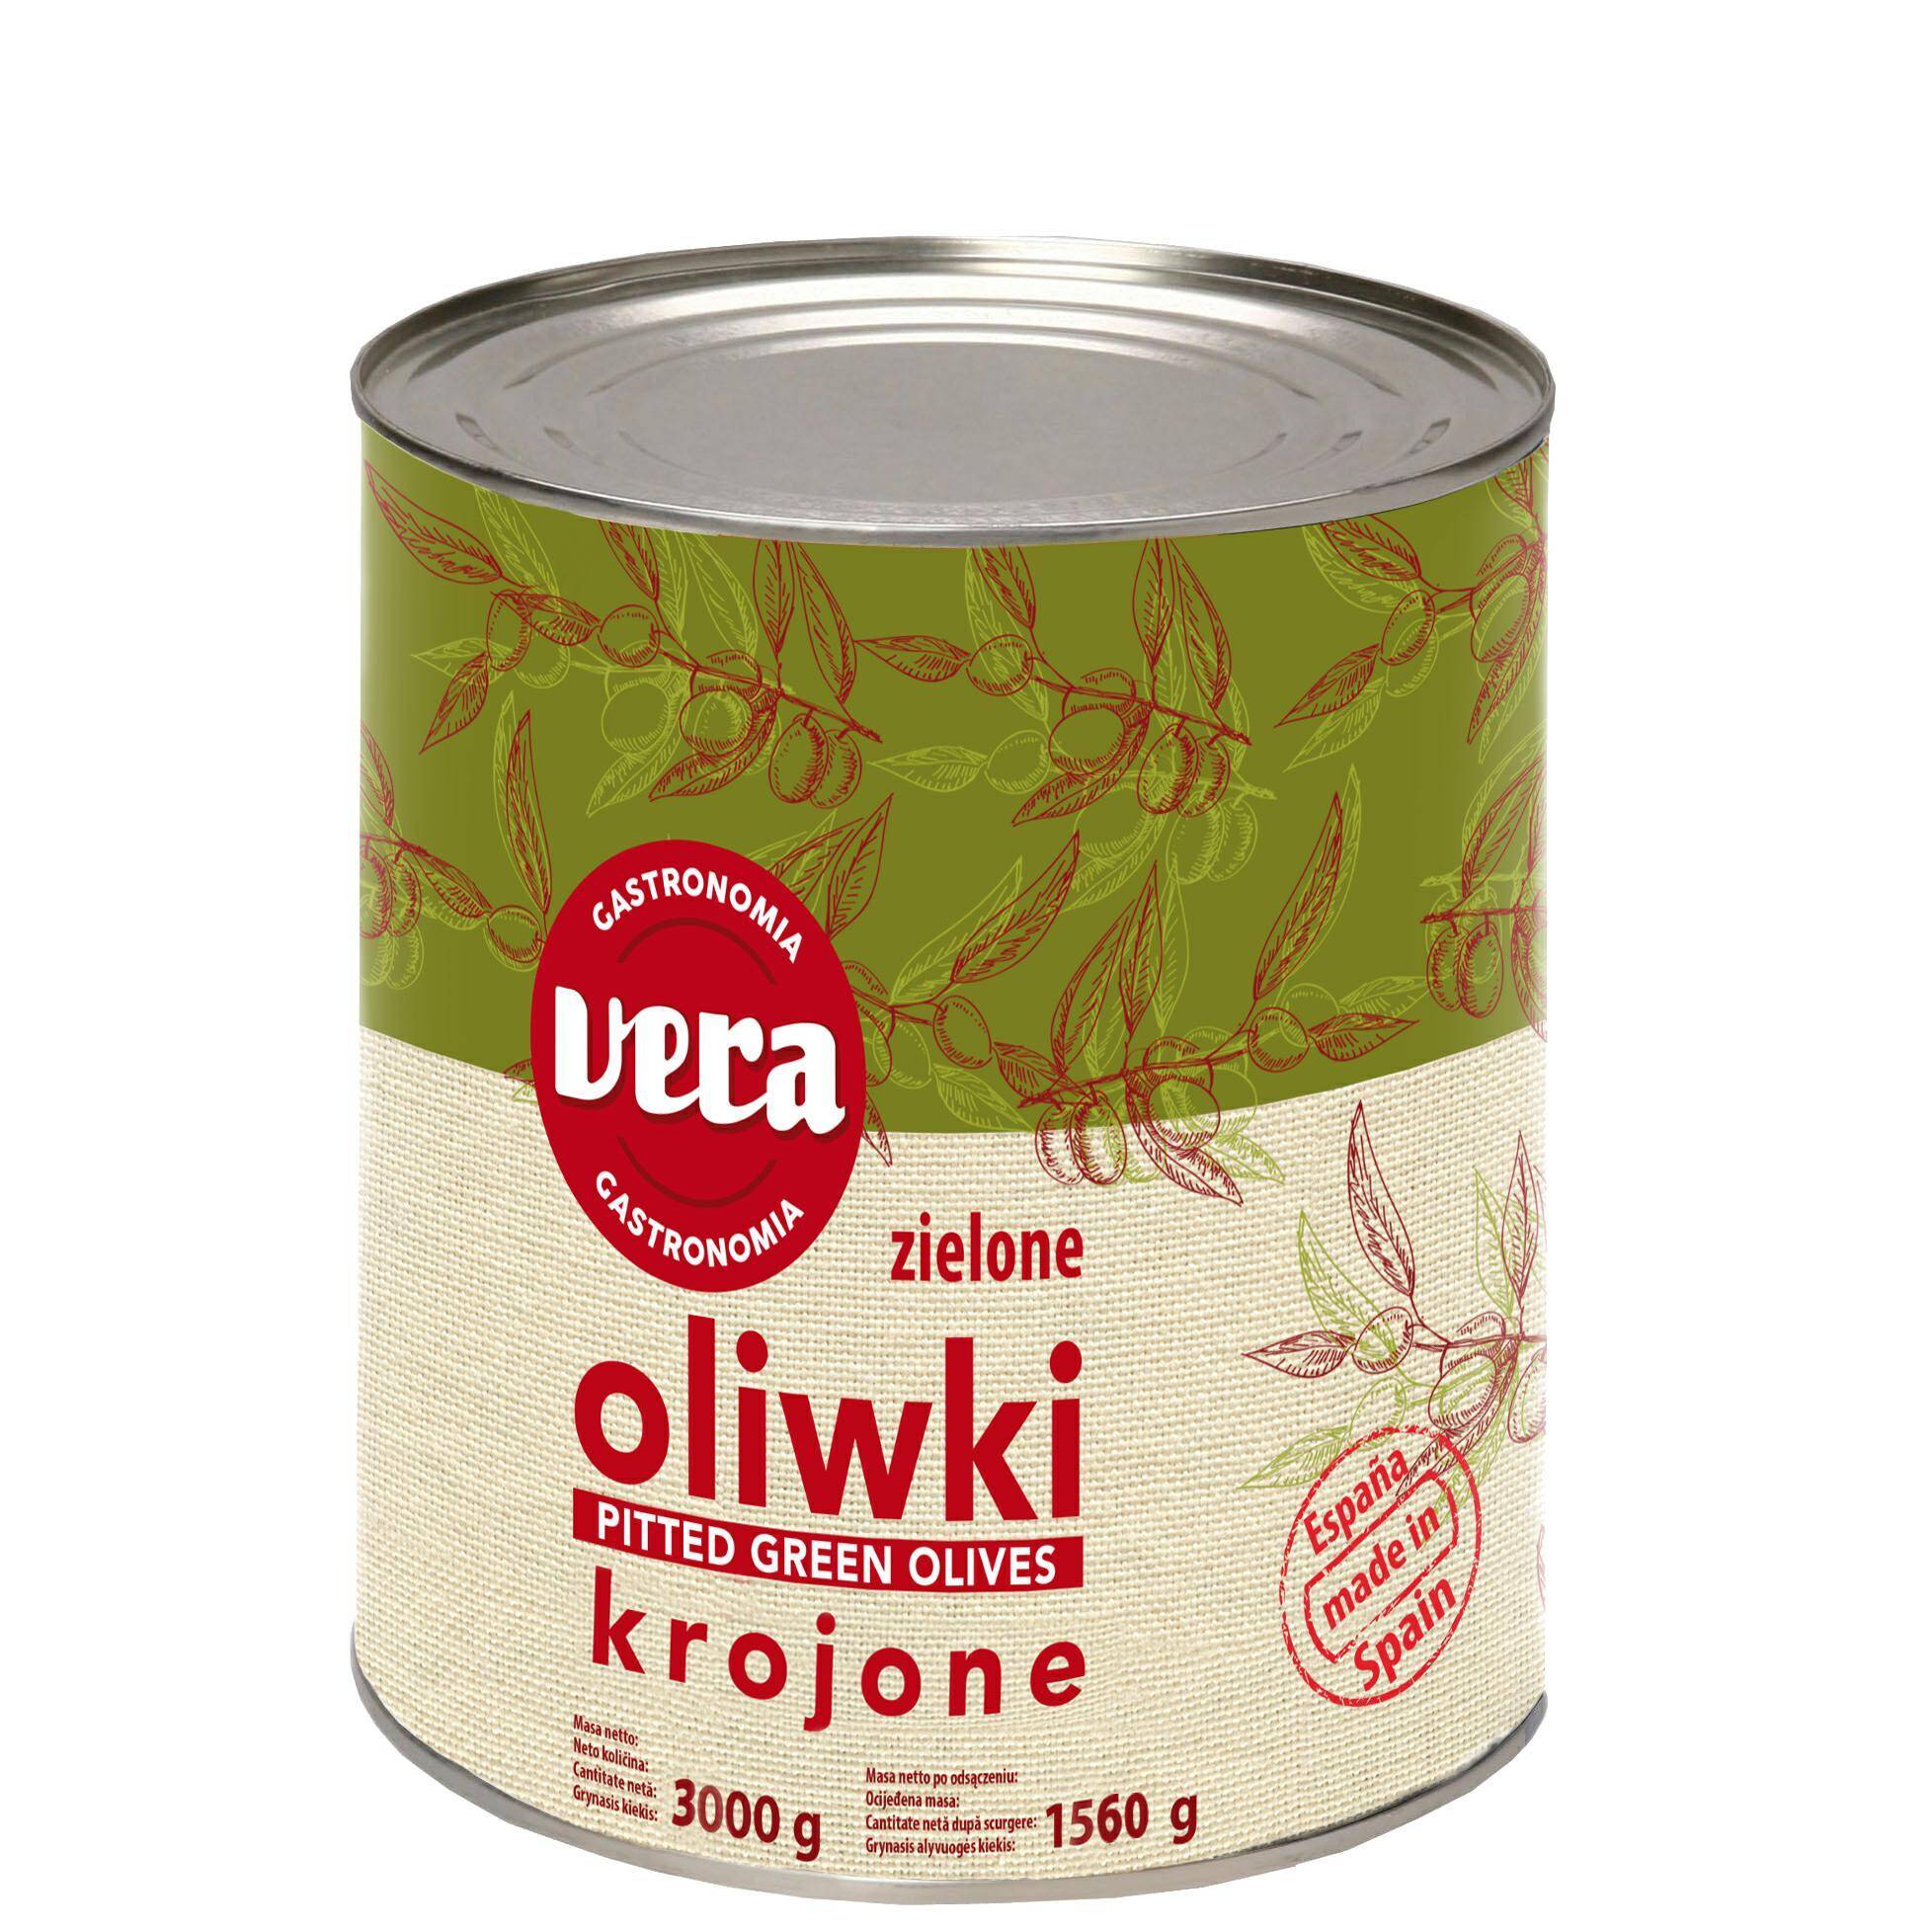 Vera Oliwki zielone krojone 3 kg (1560g)